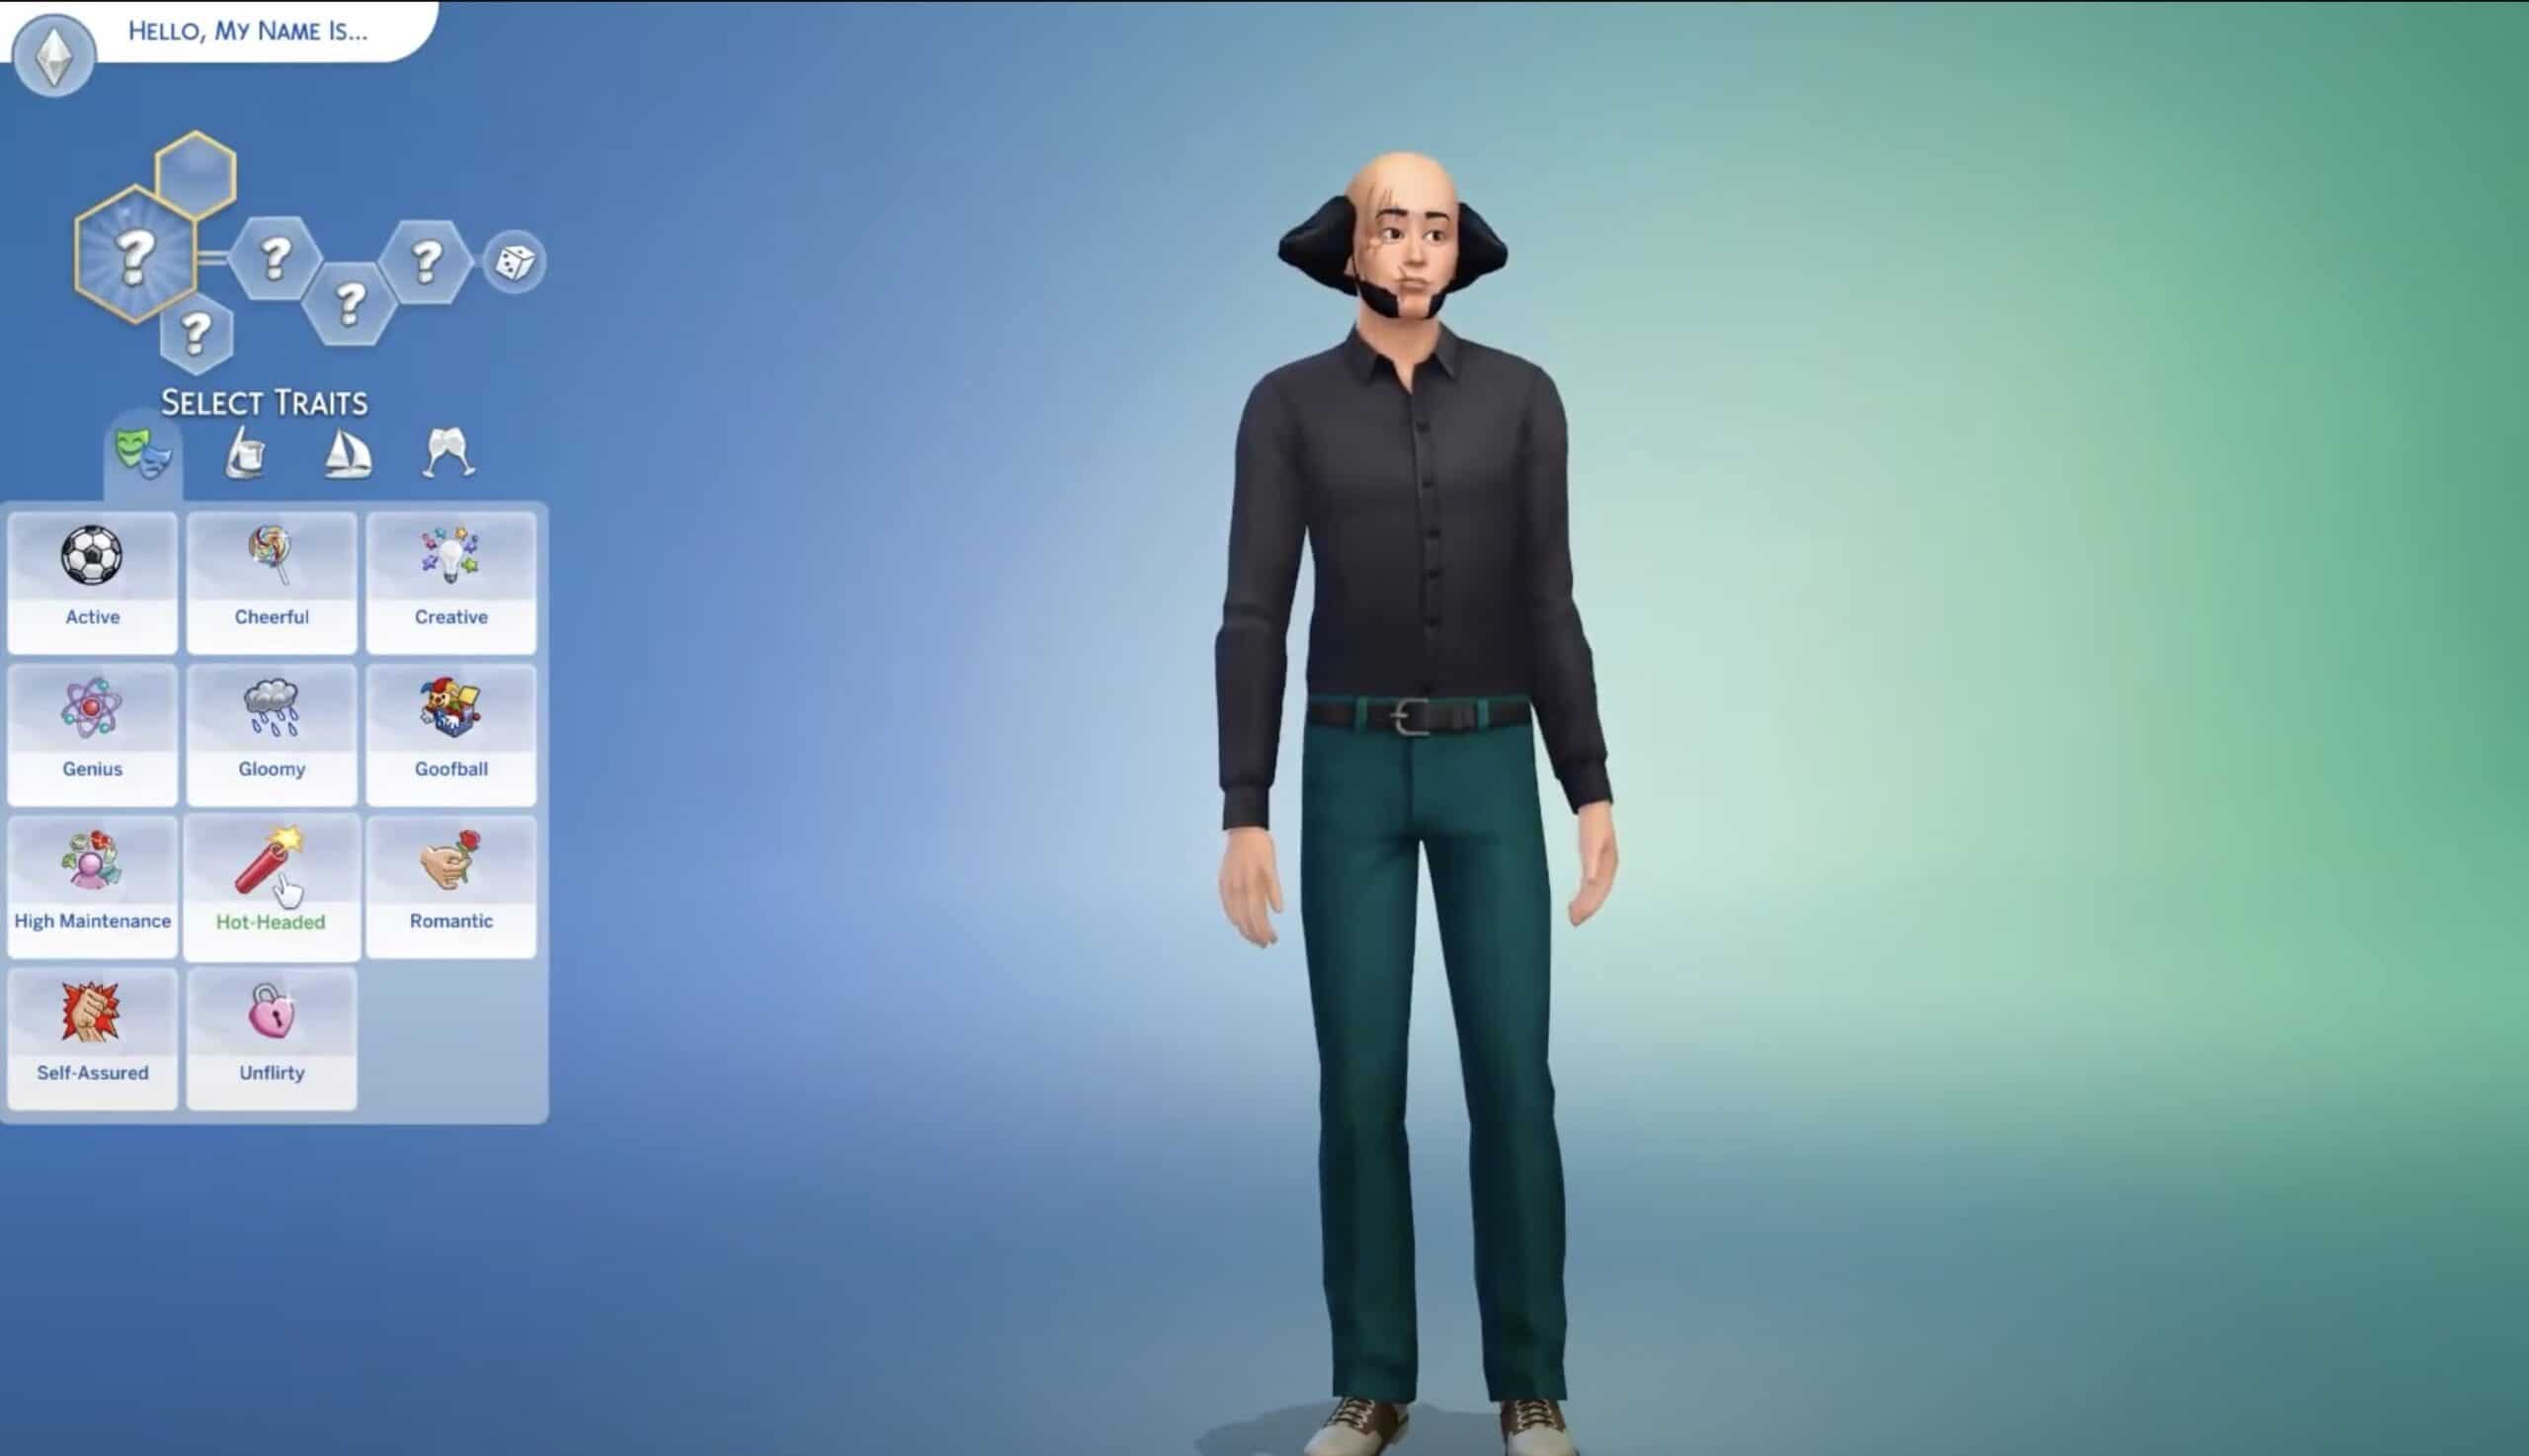 The Sims 4 Toddler cheats: Increase skills, traits, needs & more